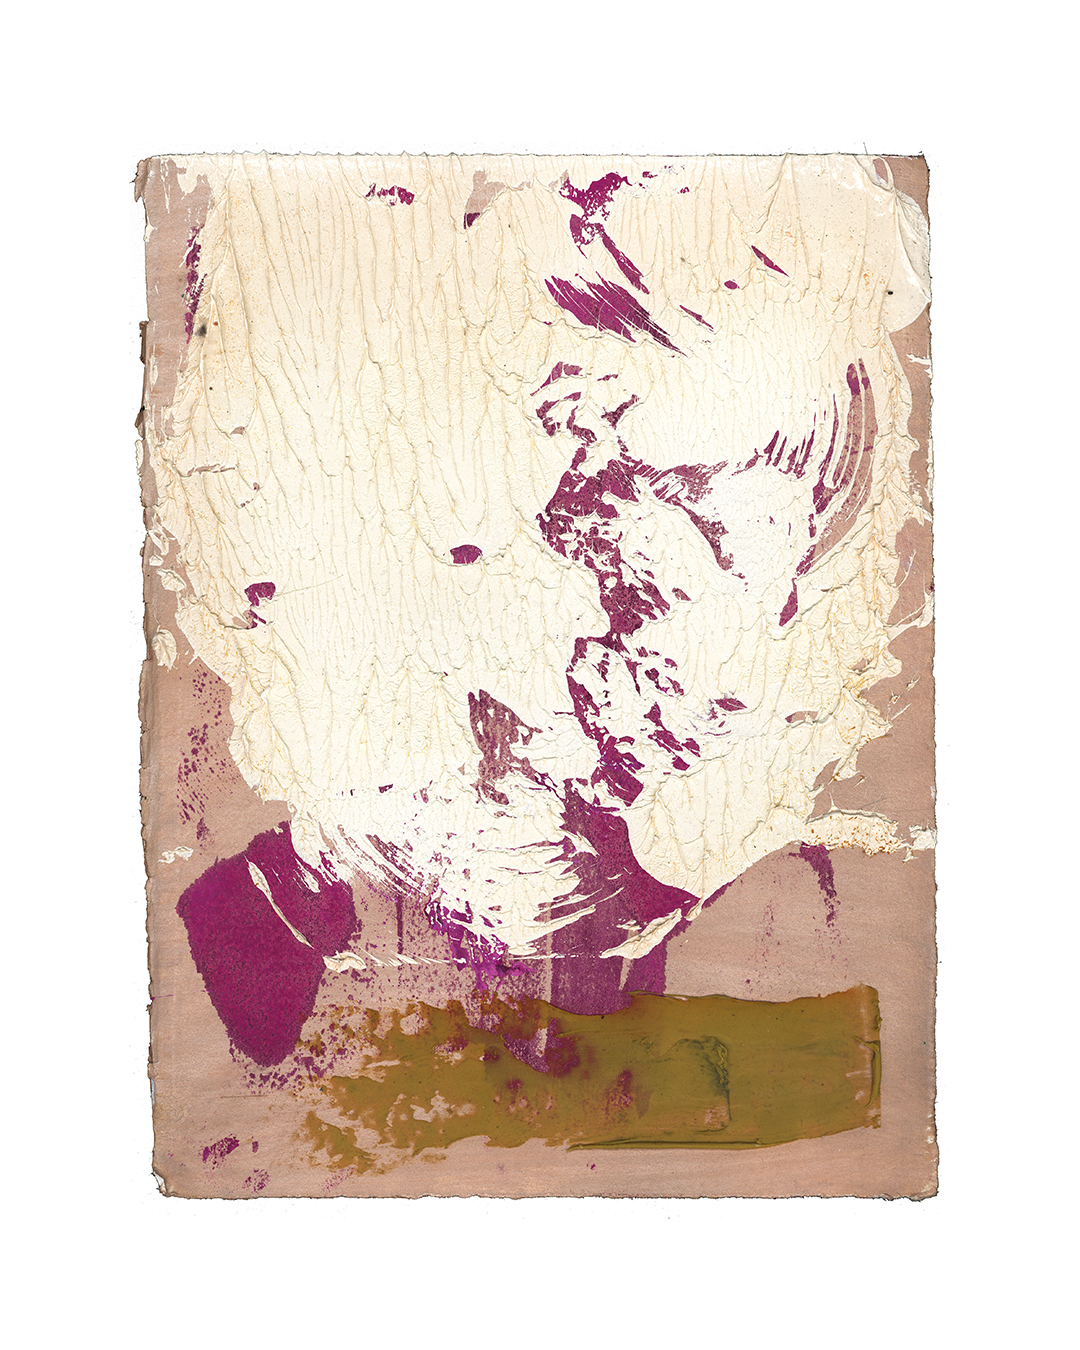 Piet Dieleman, untitled, 2020, painting, epoxy filler, oil paint, acrylic paint, pigment on paper, 380 x 285 mm, €930